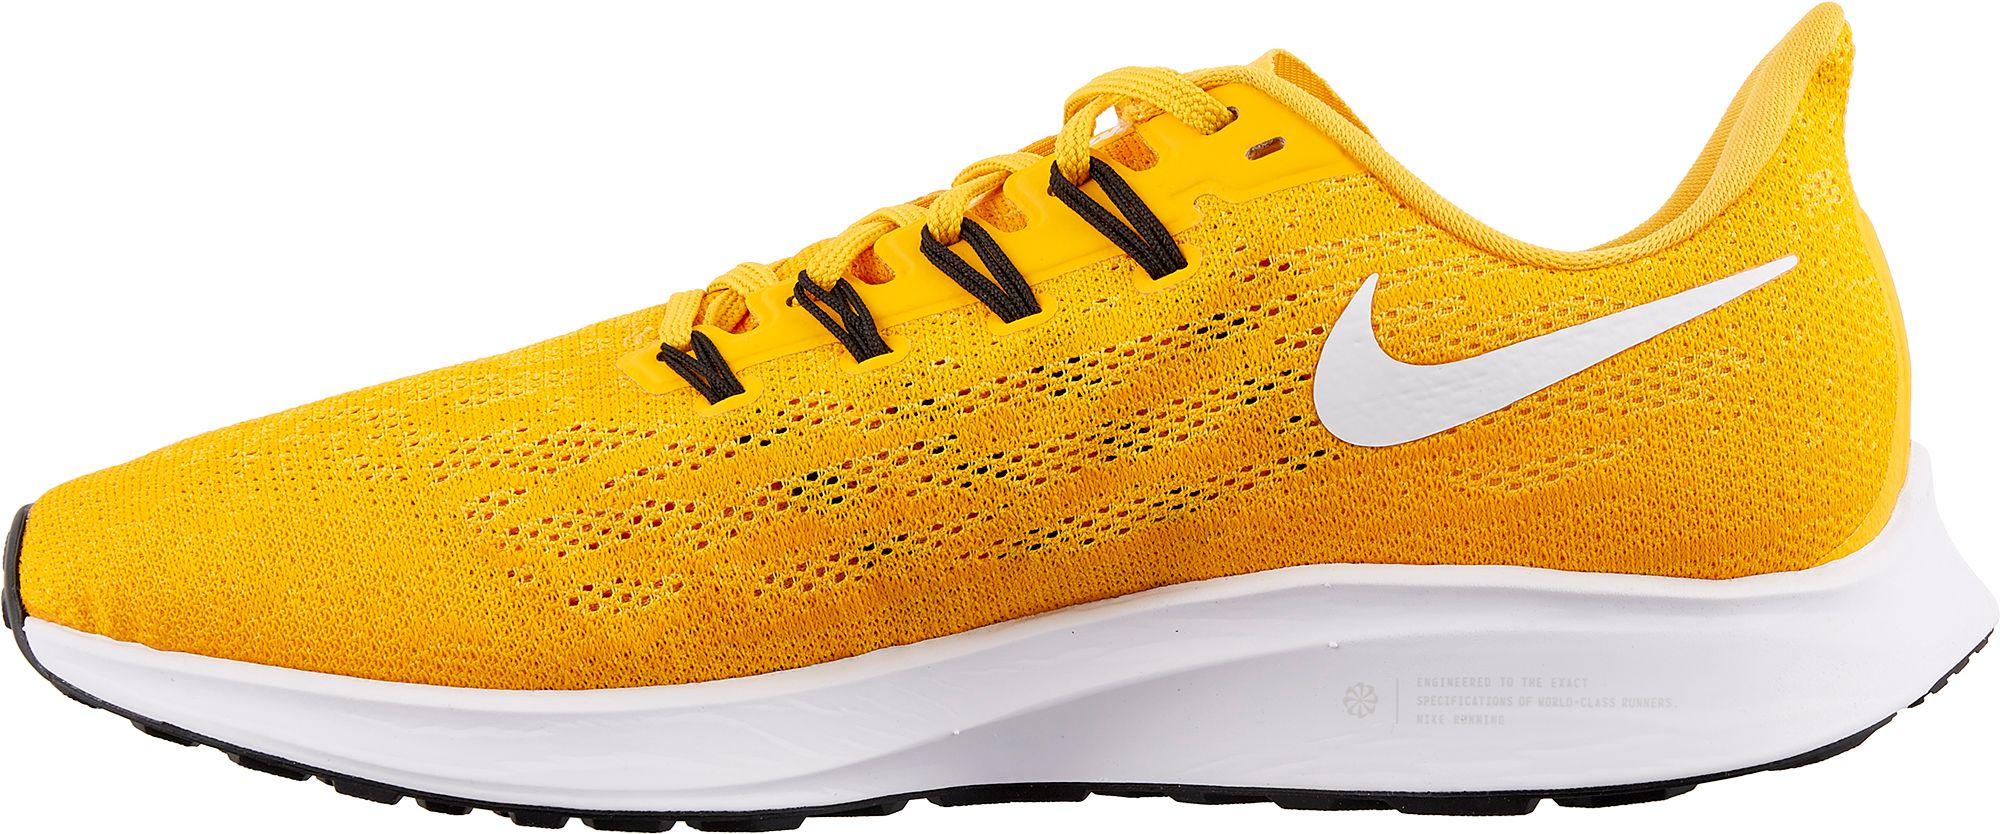 Nike Air Zoom Pegasus 36 Running Shoes in Yellow/White (Black) | Lyst